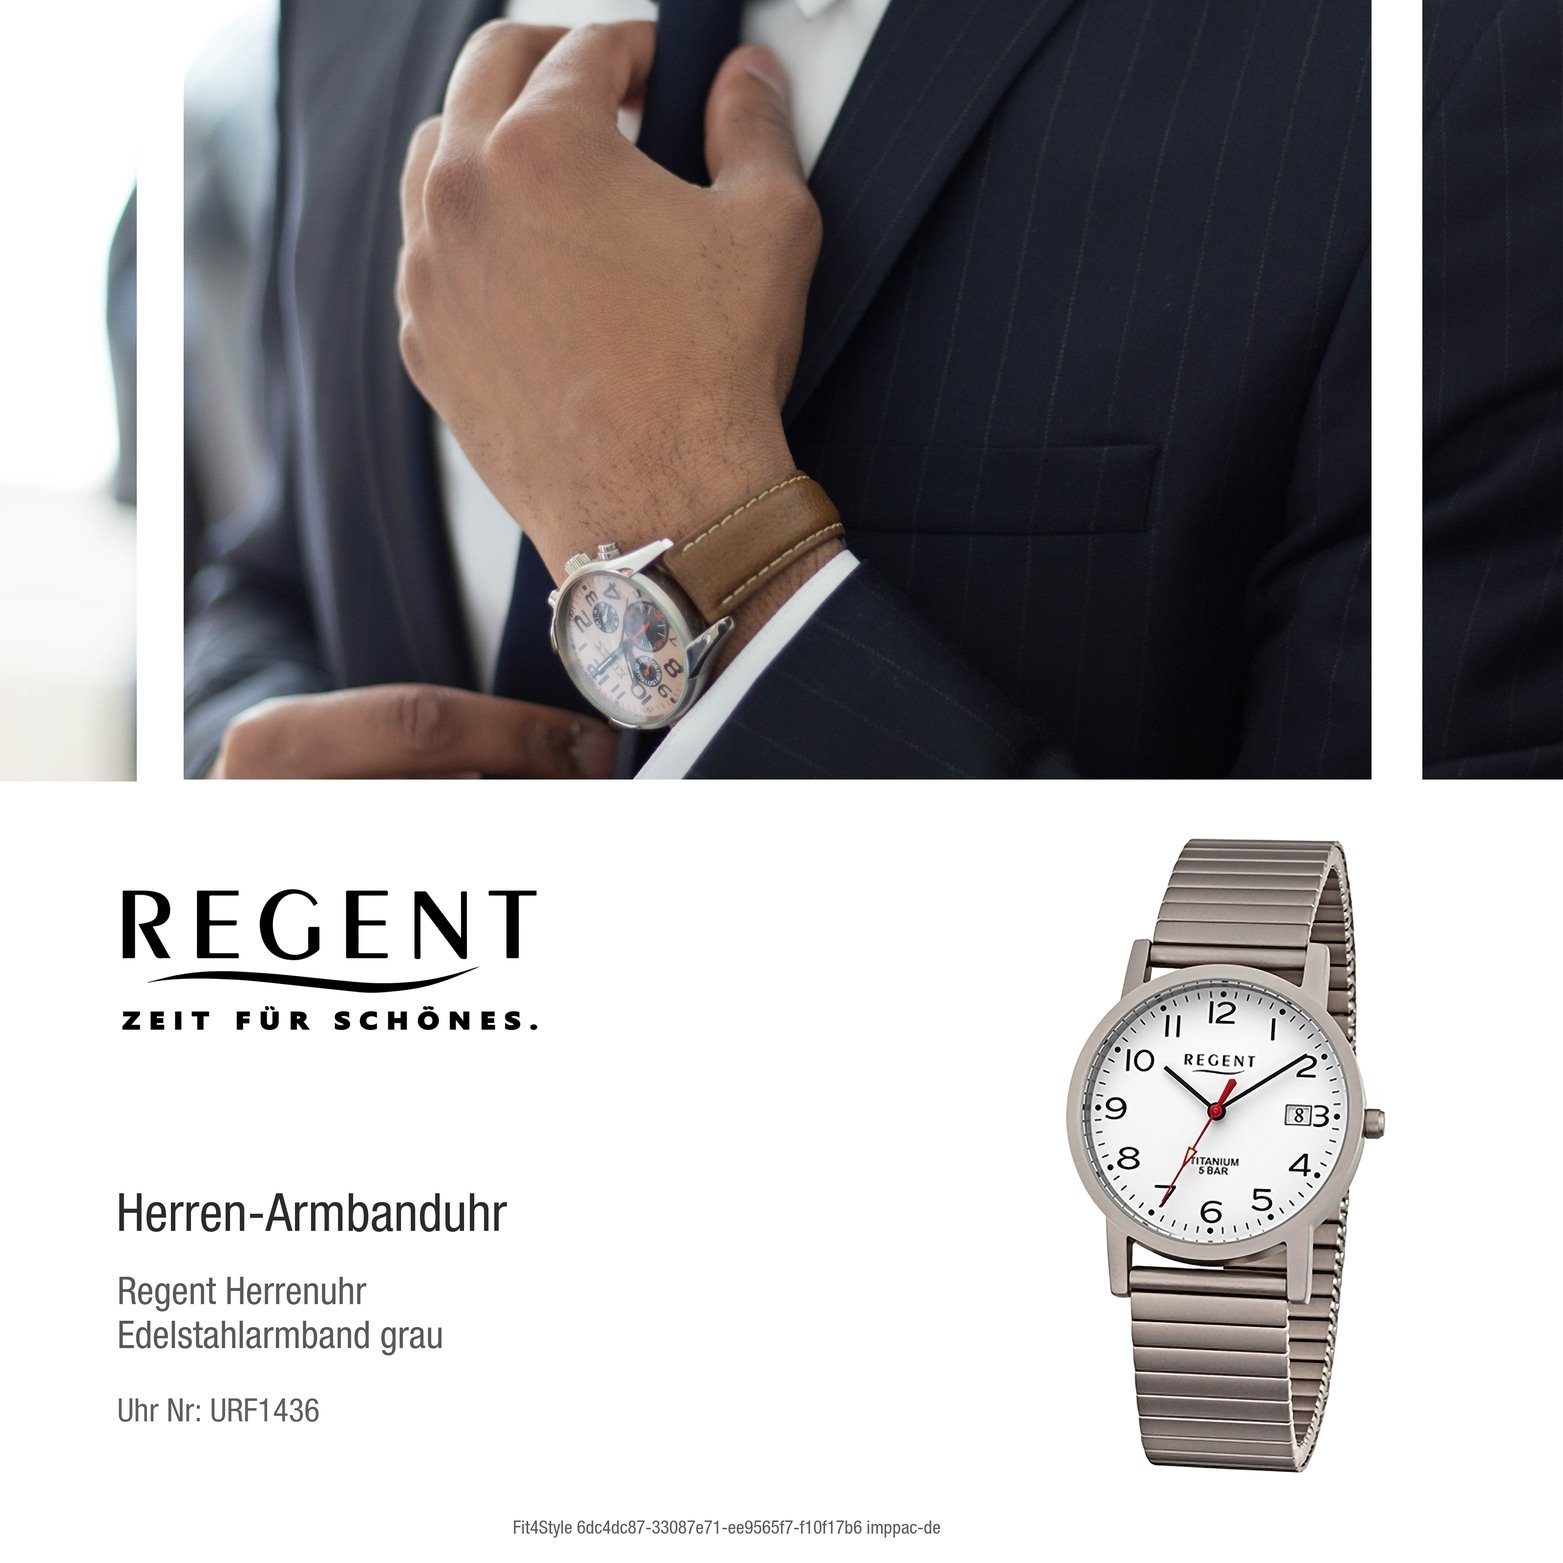 Herrenuhr Herren Regent Regent Edelstahlarmband grau, rundes Armbanduhr Analog, 34mm) (ca. Quarzuhr groß Gehäuse, extra